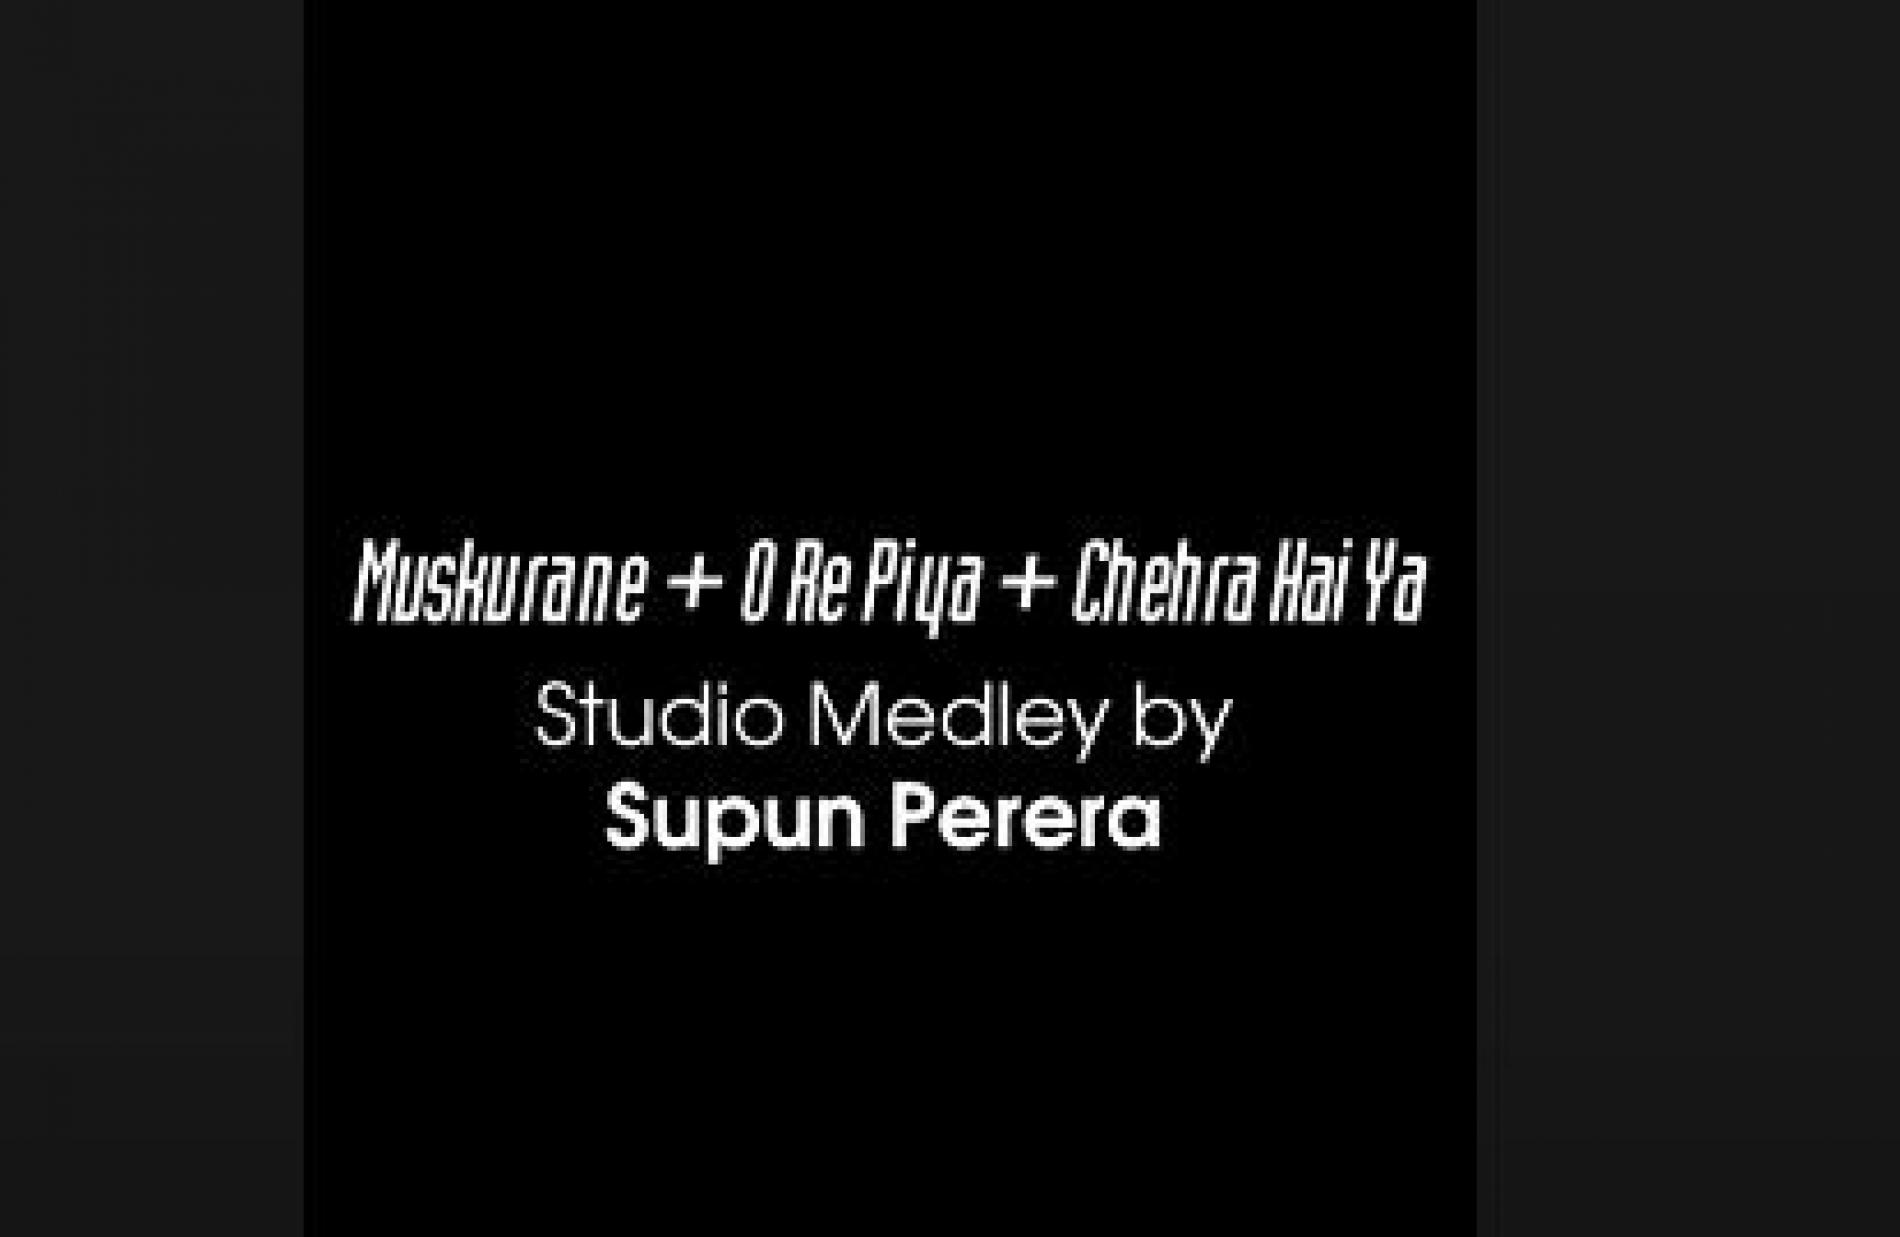 Supun Perera – Nostalgic Bollywood Studio Medley | Arijit Singh | Kishore Kumar | Rahat Fateh Ali